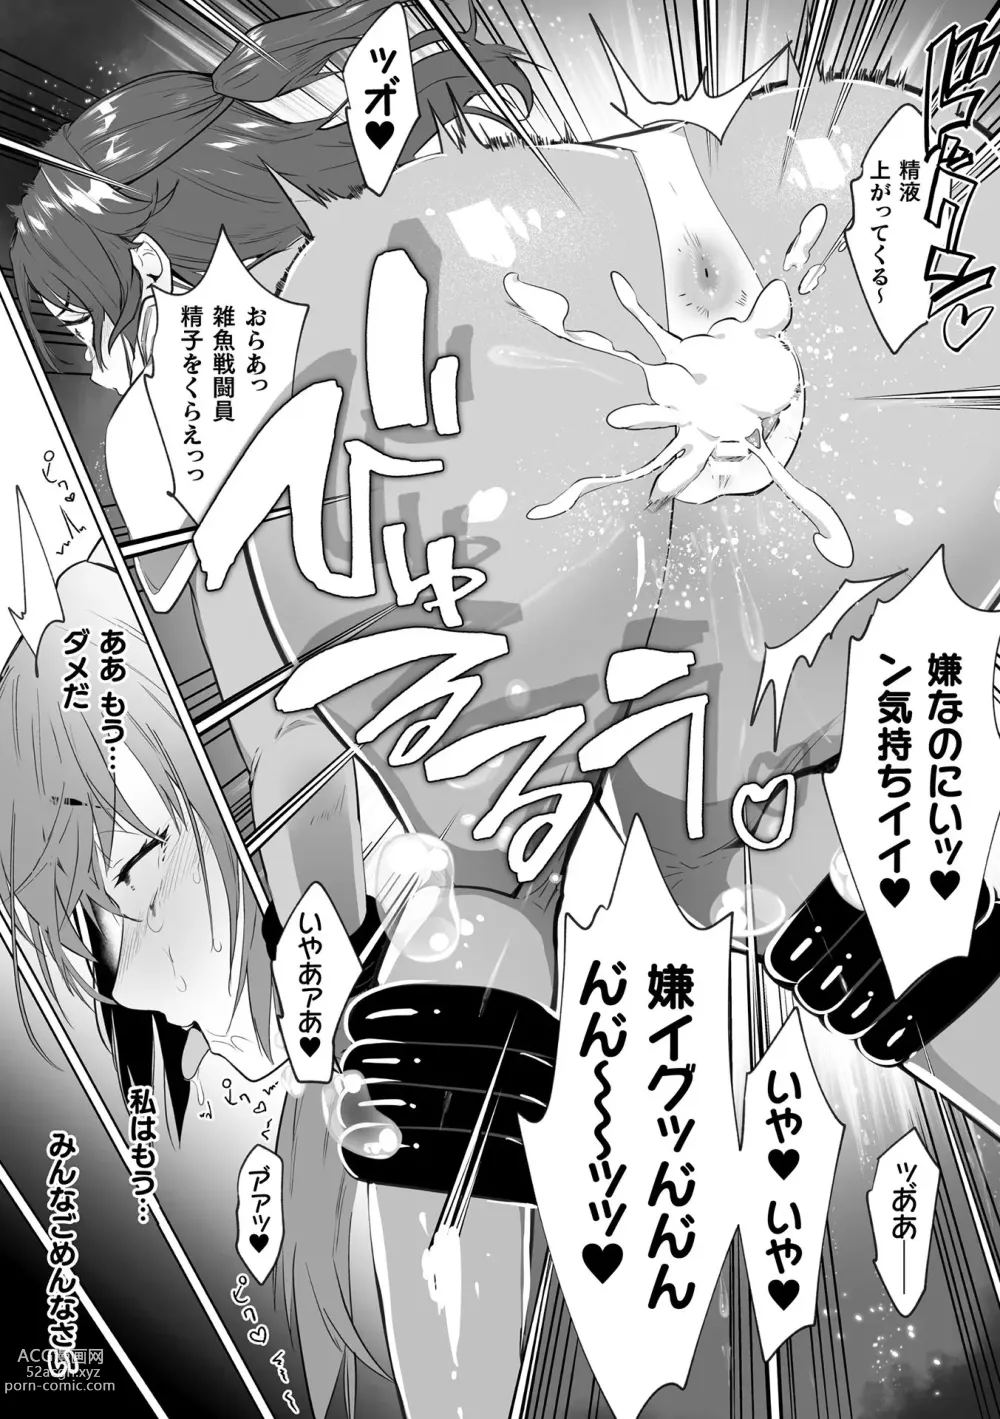 Page 137 of manga Kukkoro Heroines Vol. 28